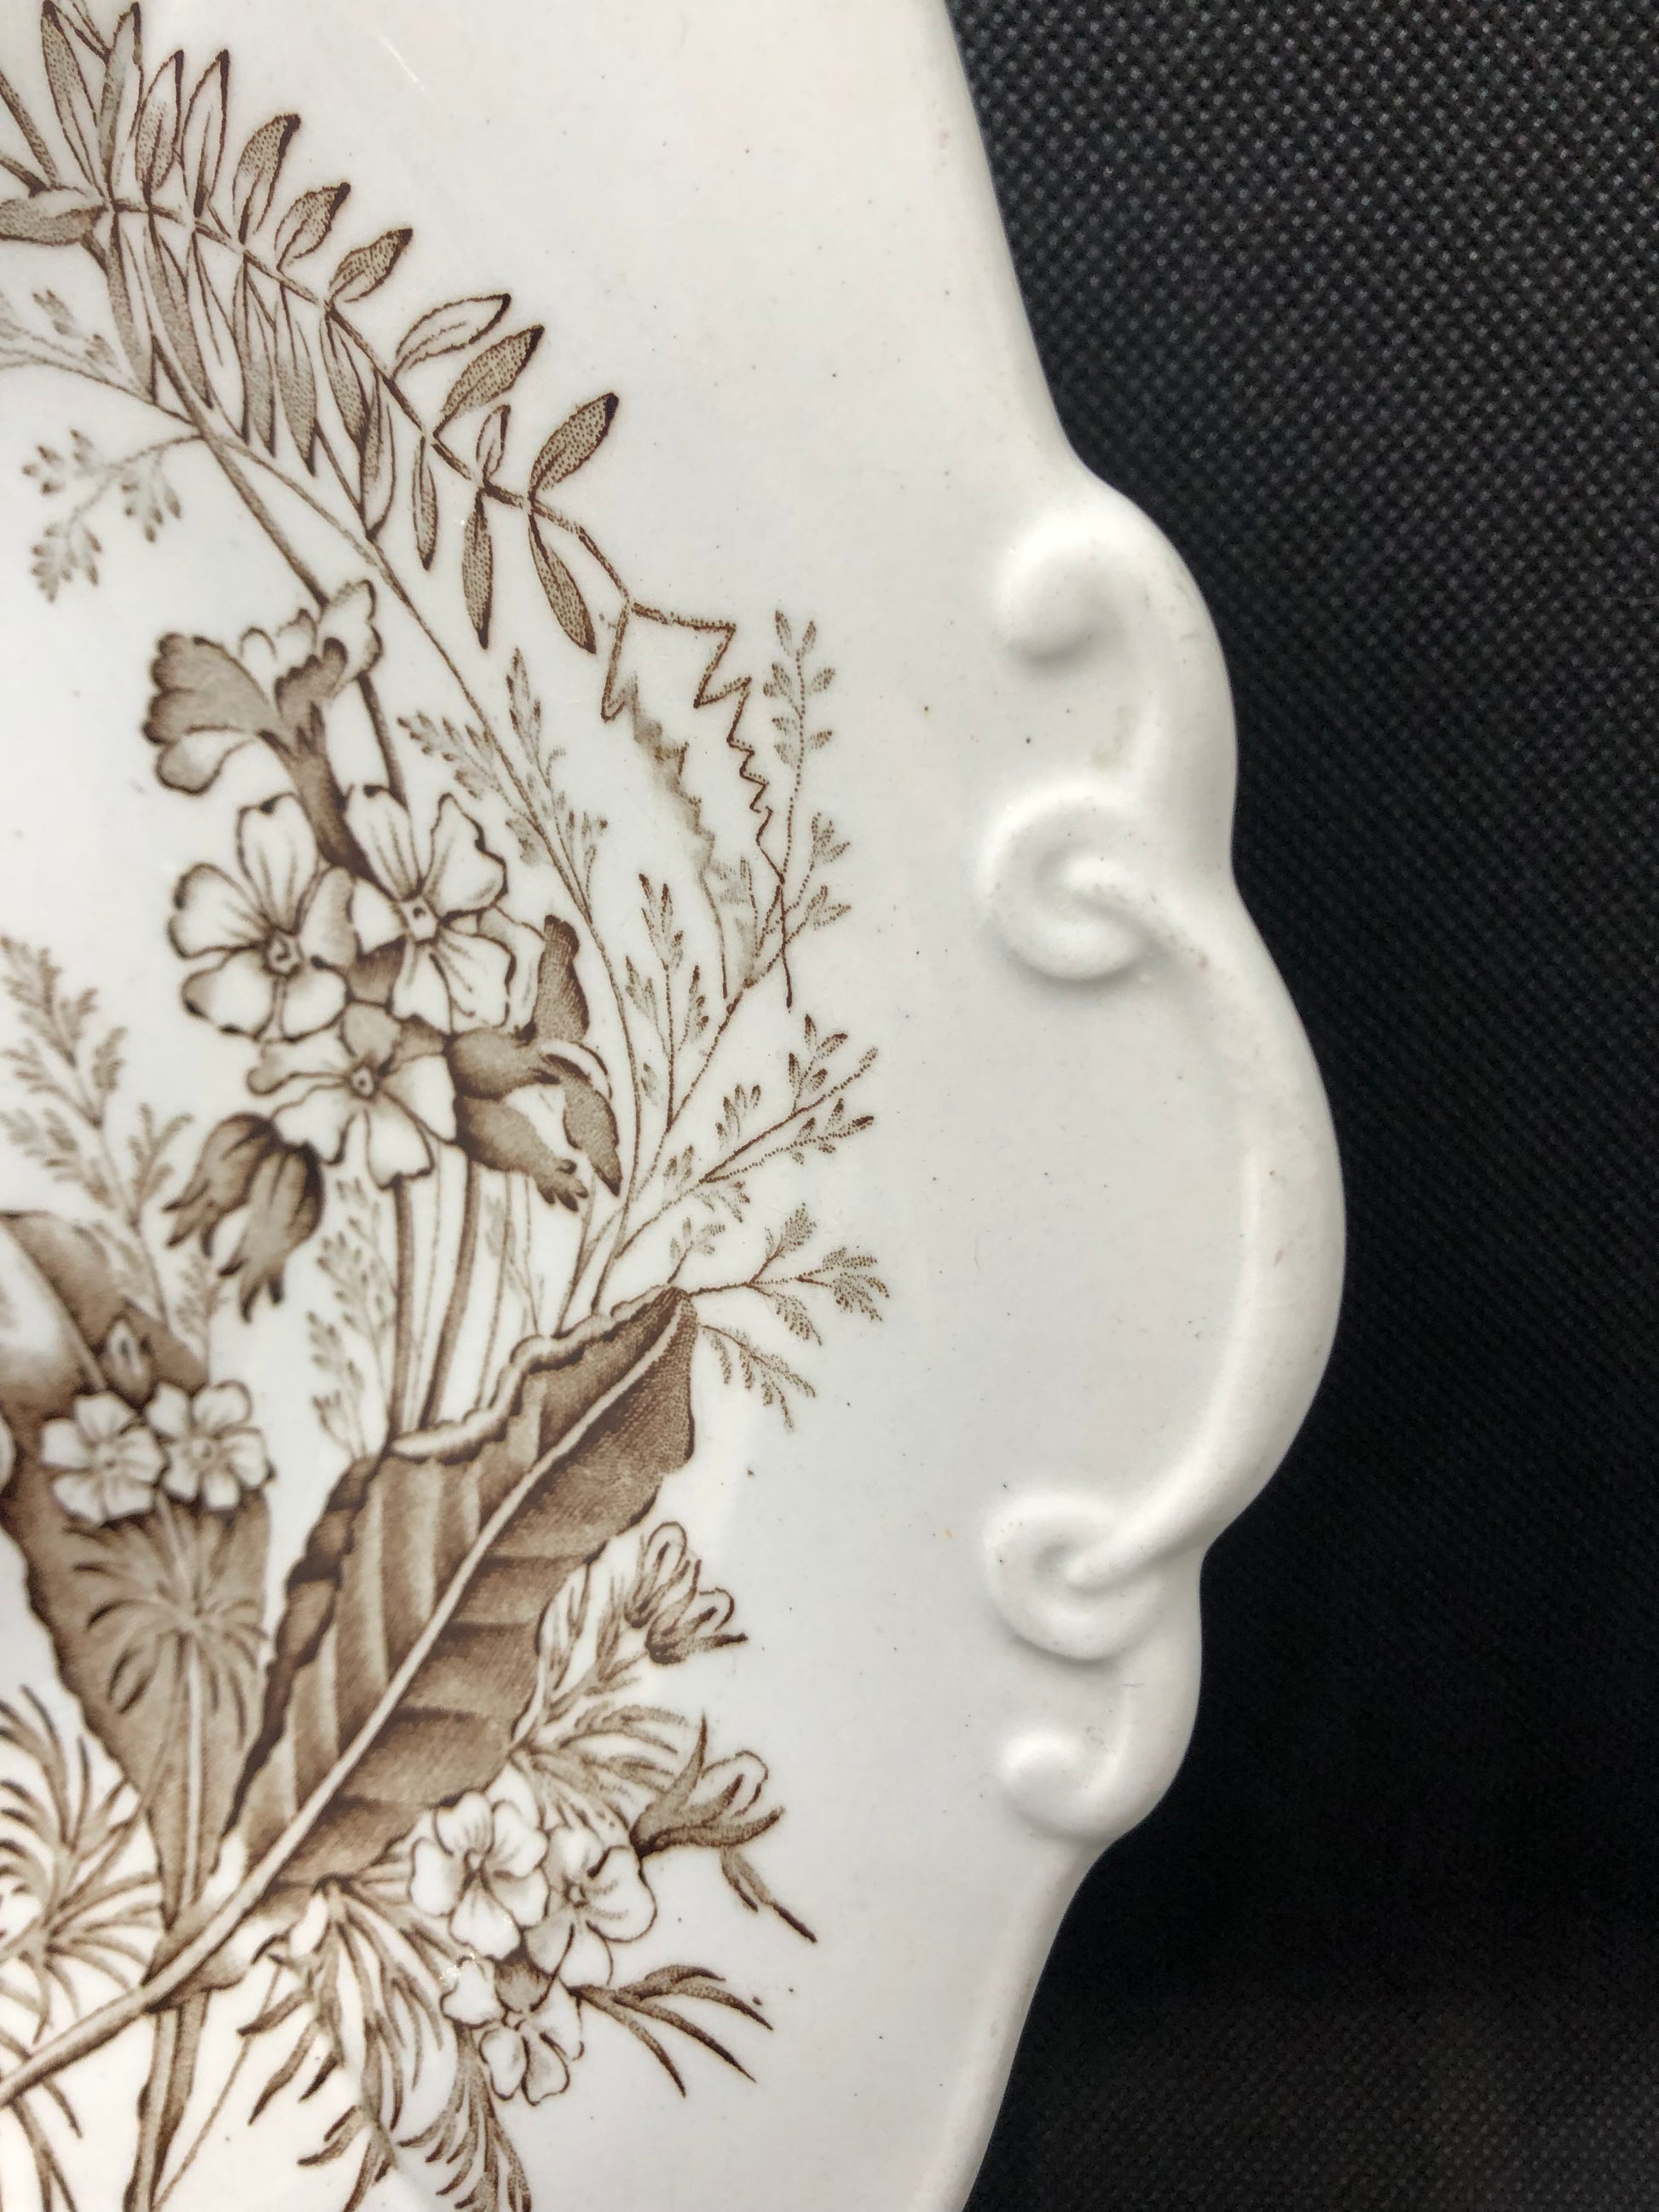 Porcelain plate antique Ashworth Bros Victoria Pattern Ironstone transferware brown handle